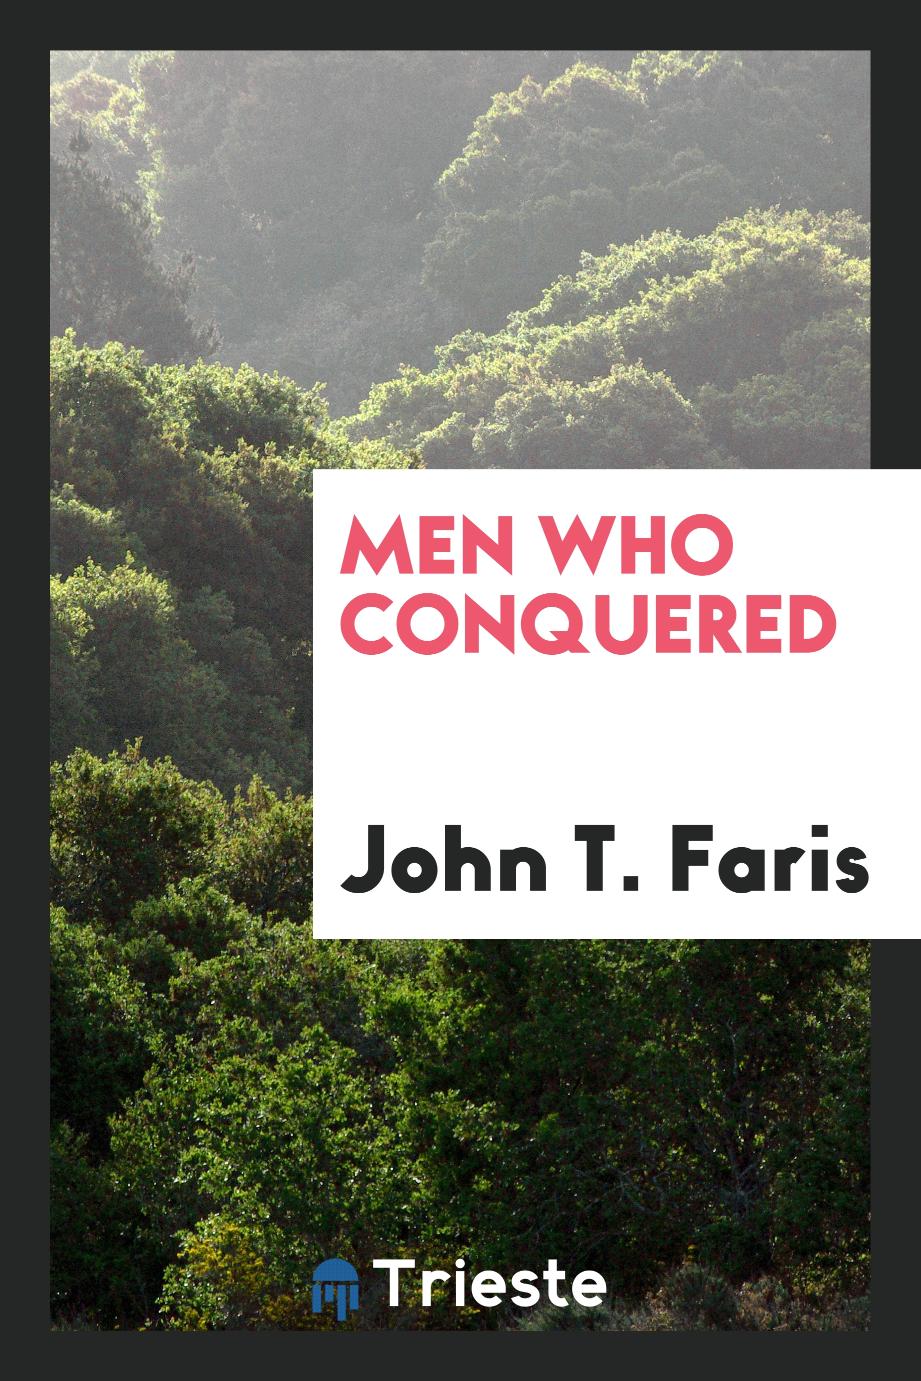 Men who conquered